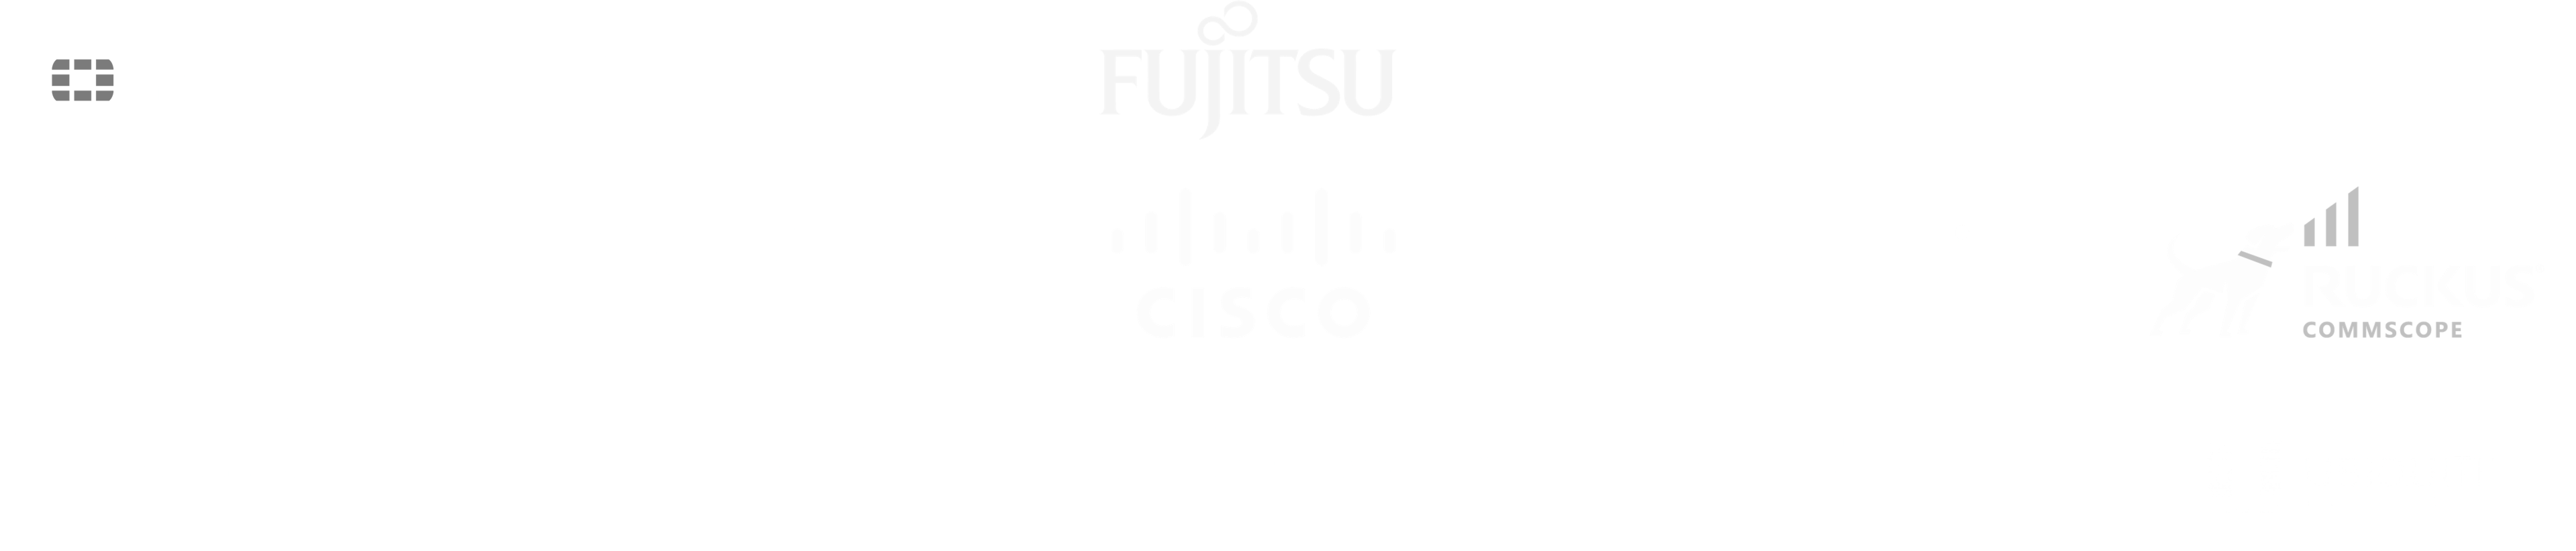 Partners image logos